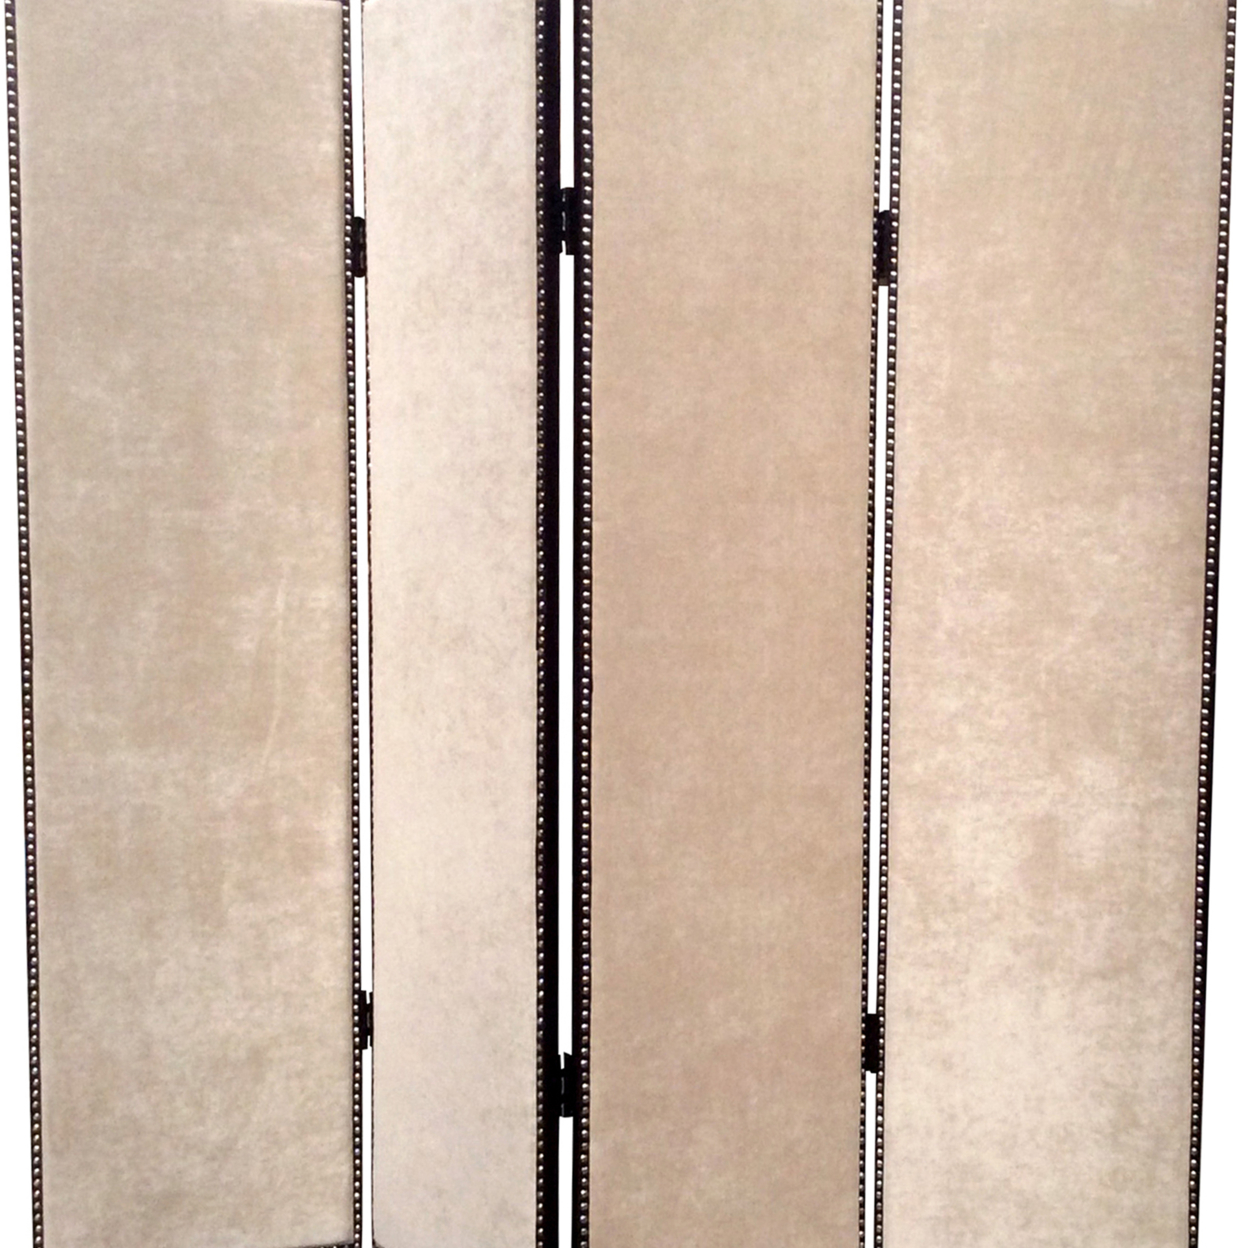 4 Panel Foldable Fabric Screen With Nailhead Trims, Beige And Black- Saltoro Sherpi